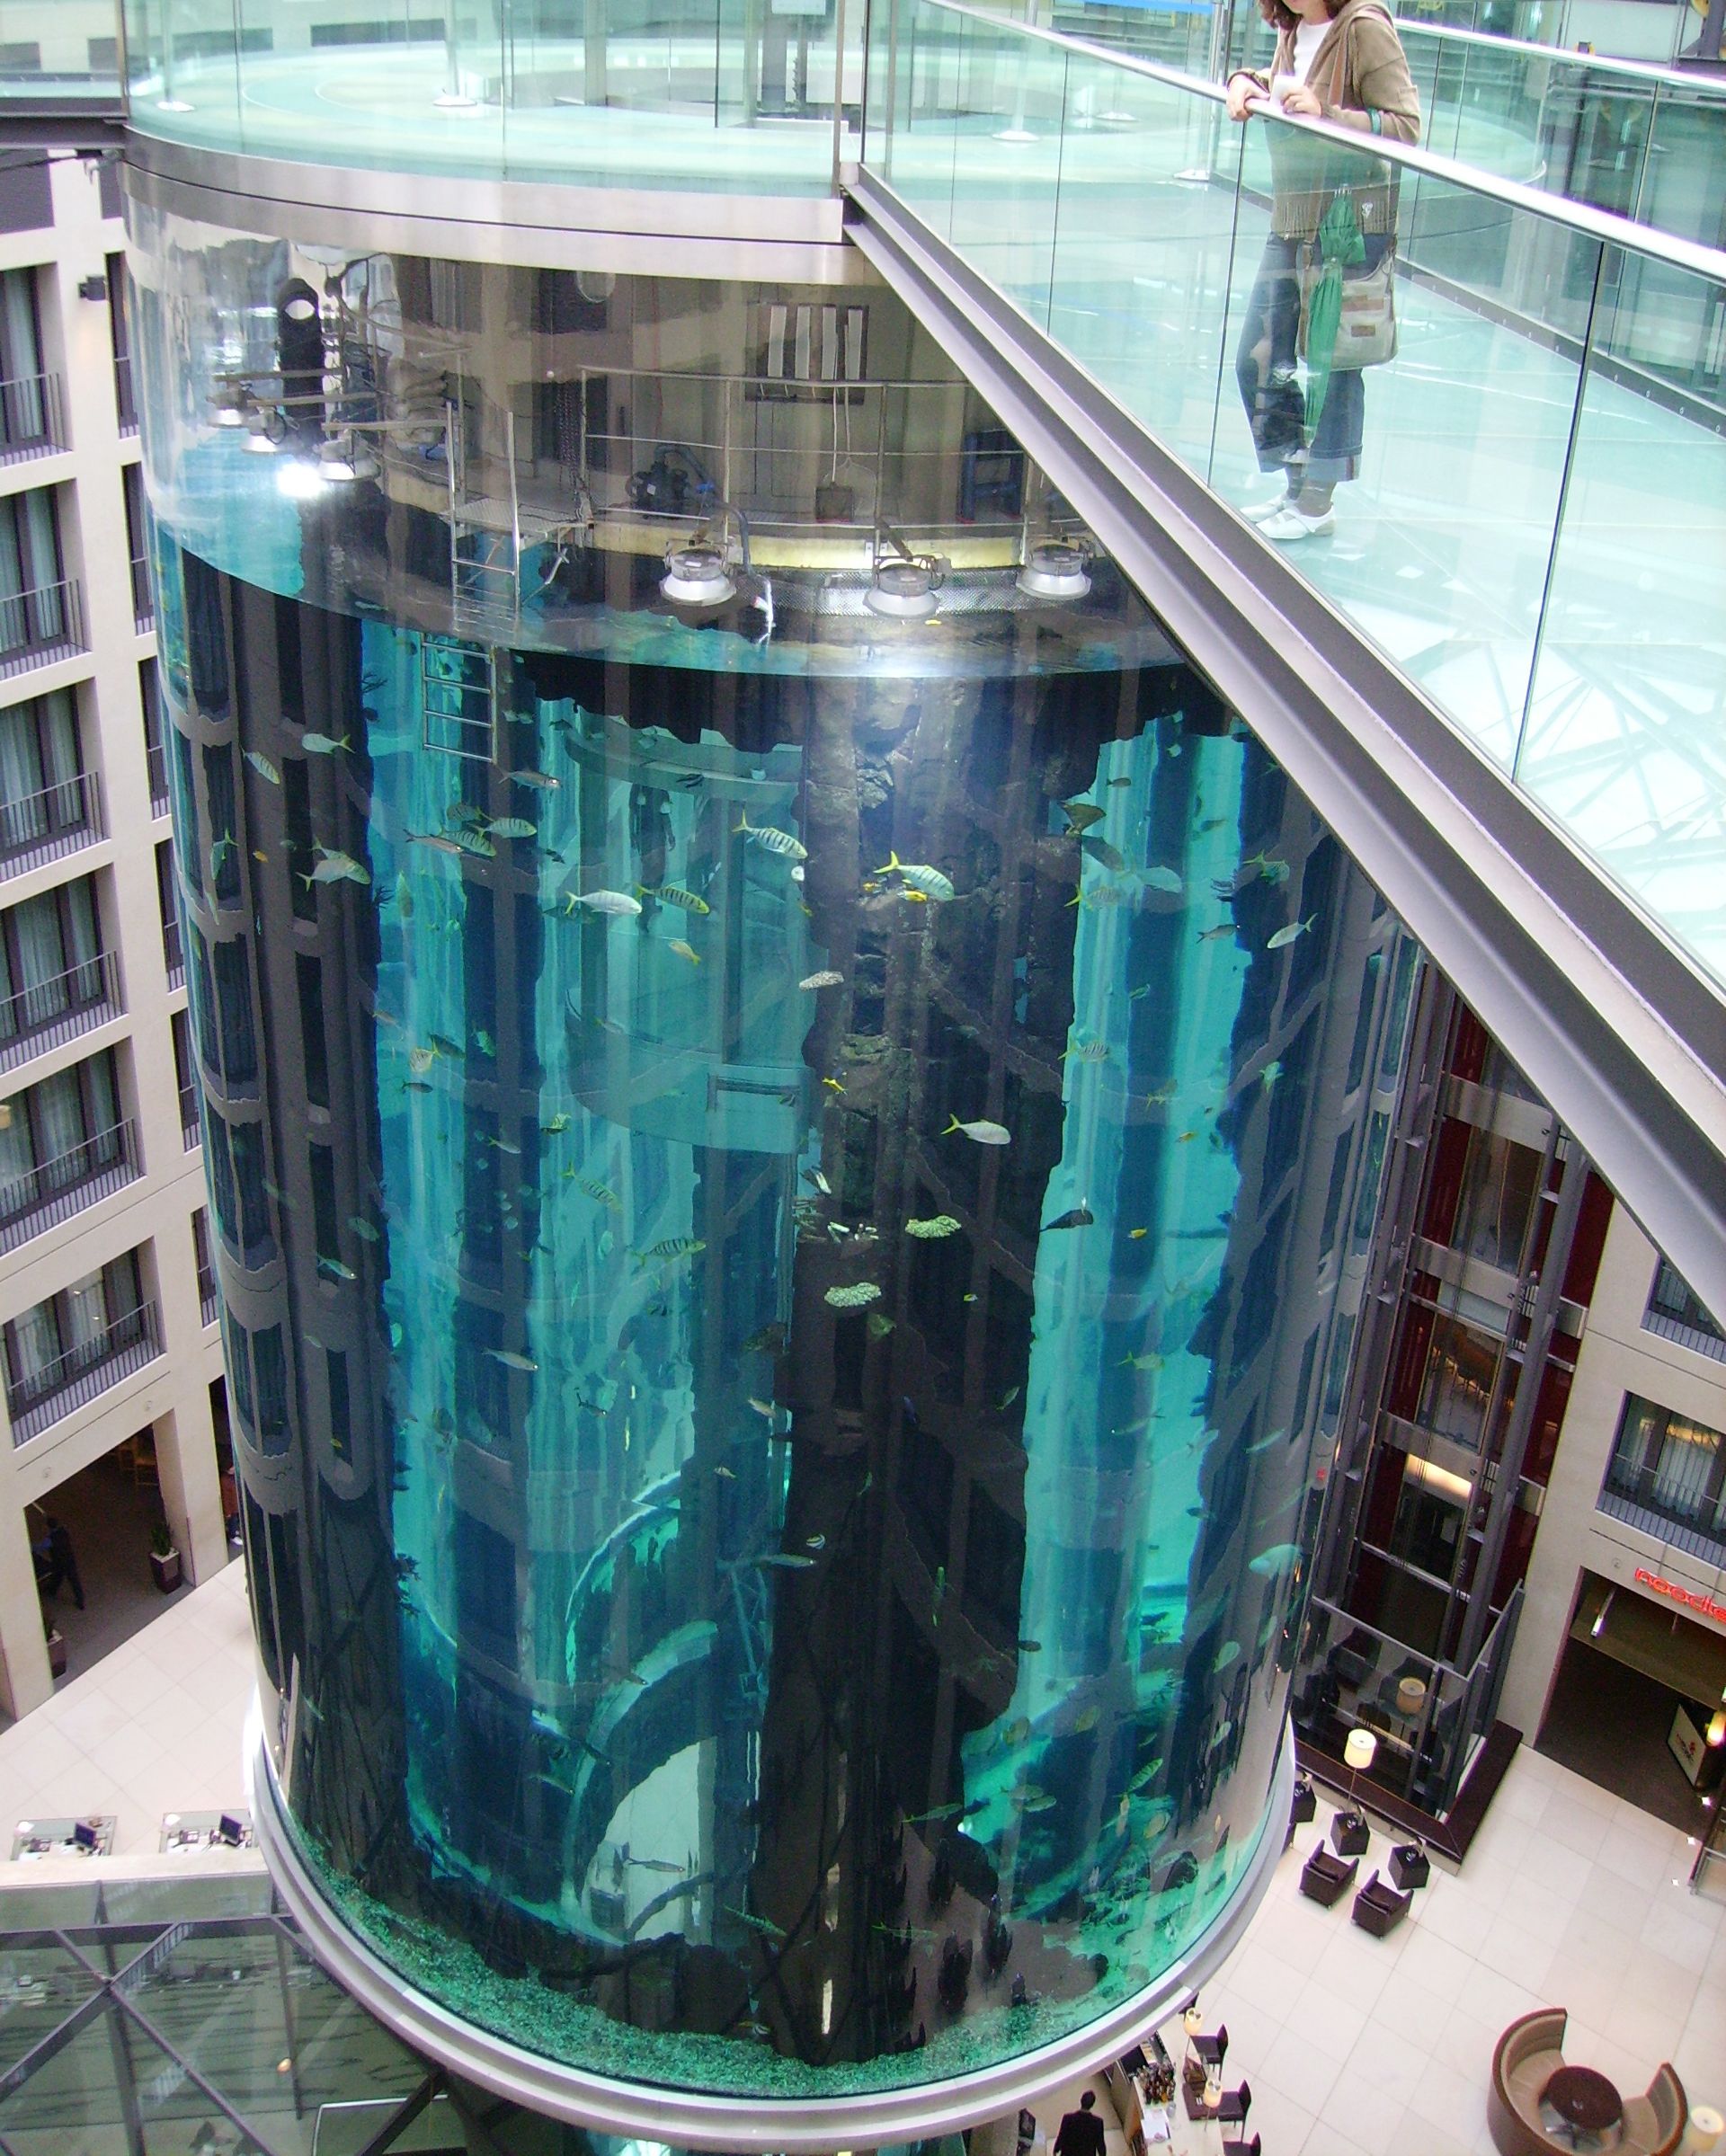 Aquarium elevator in Berlin Germany